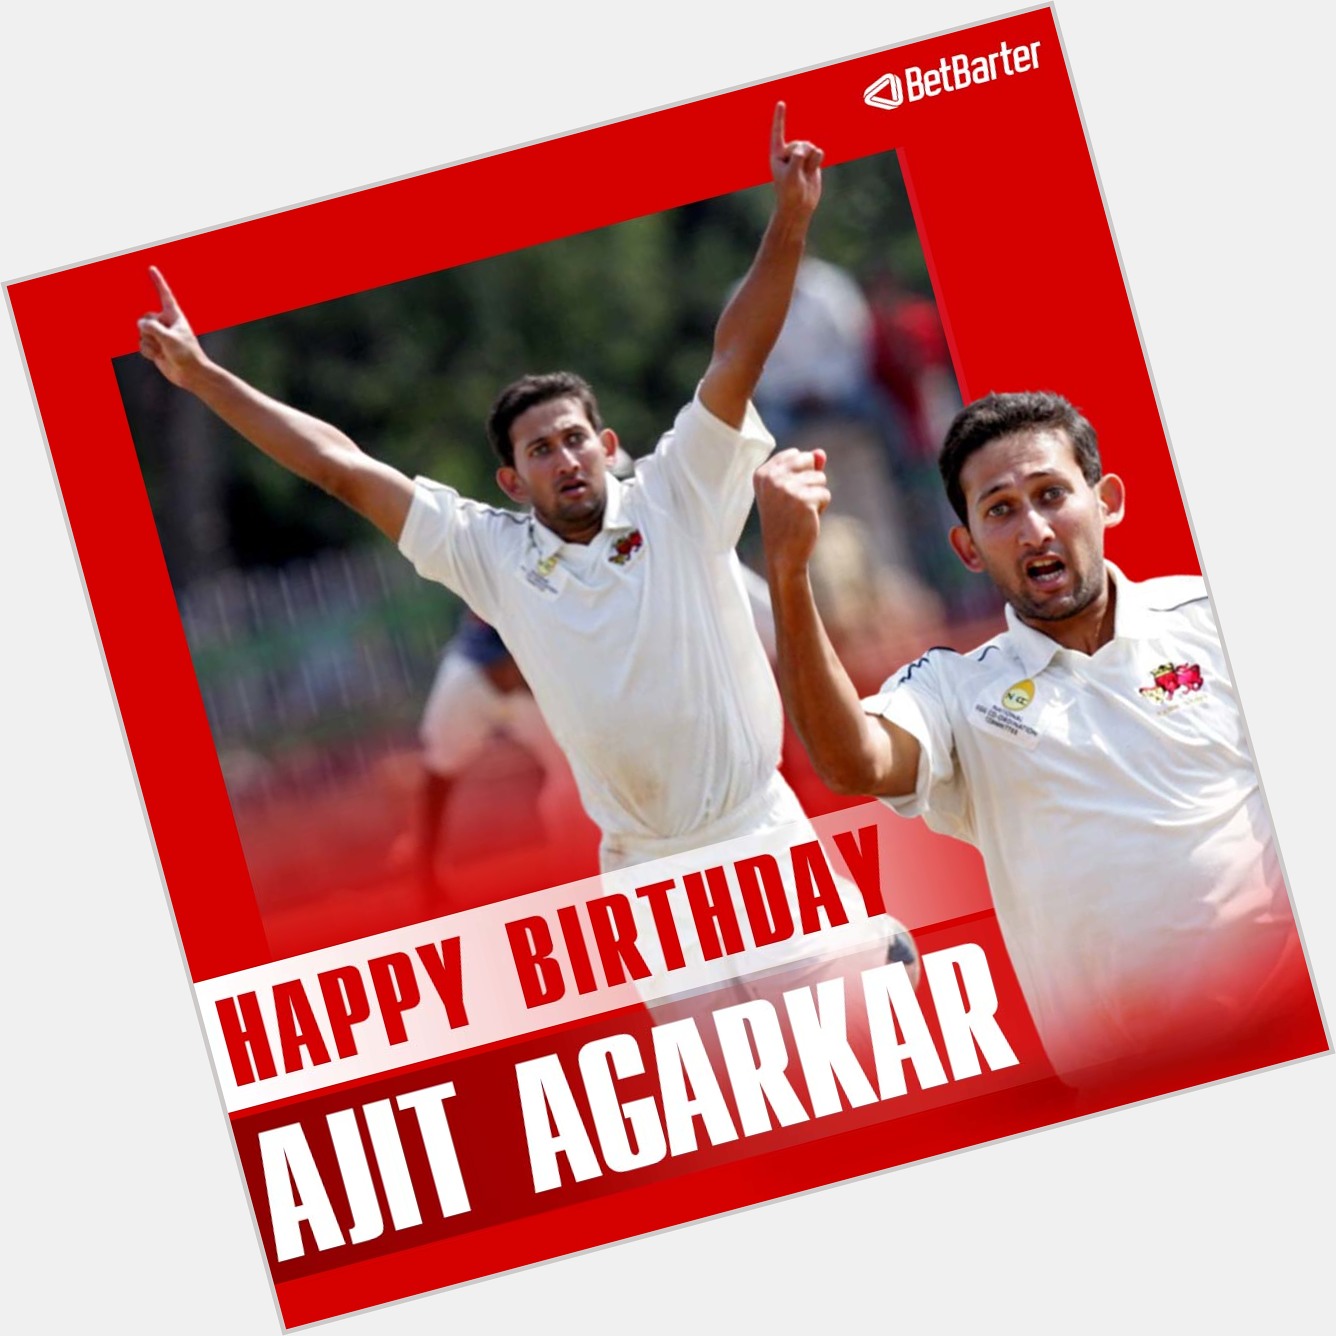 Wishing a very Happy Birthday, Ajit Agarkar      